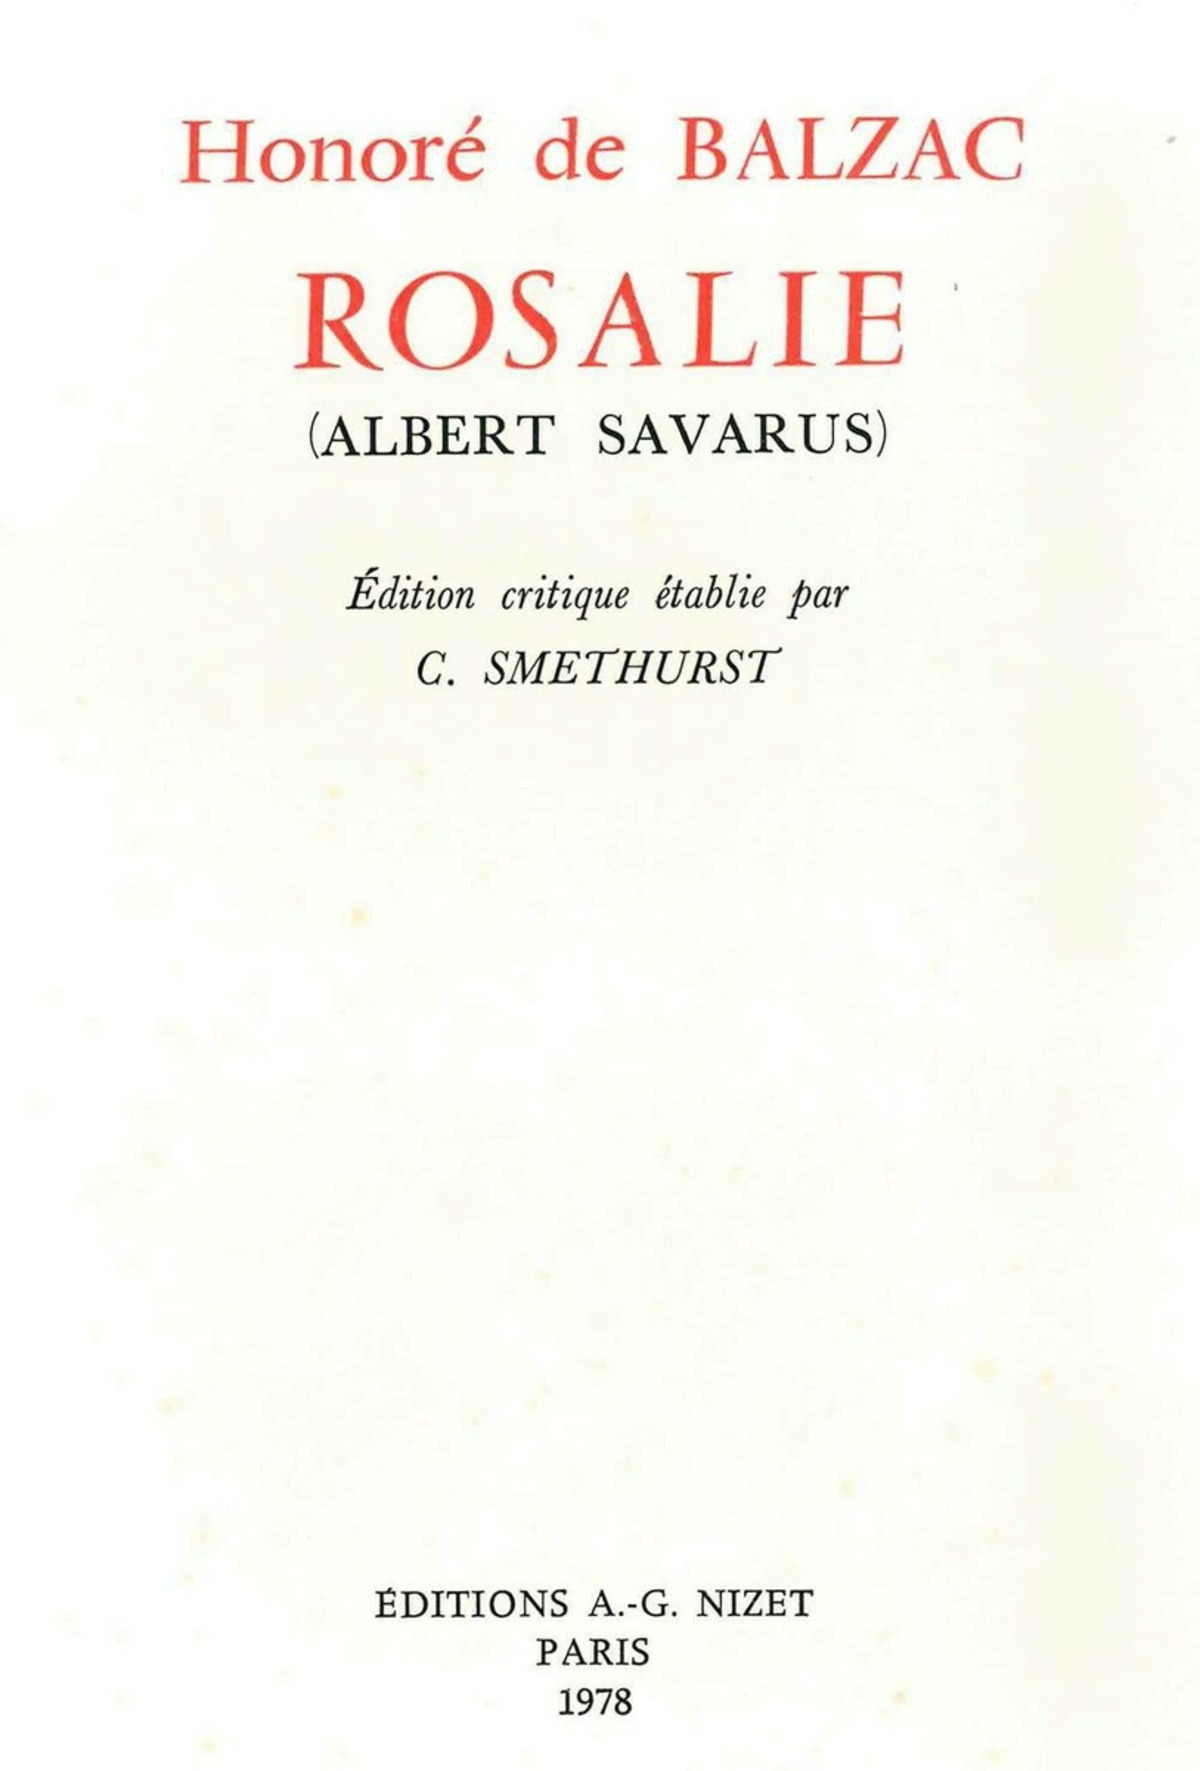 Rosalie (Albert Savarus)